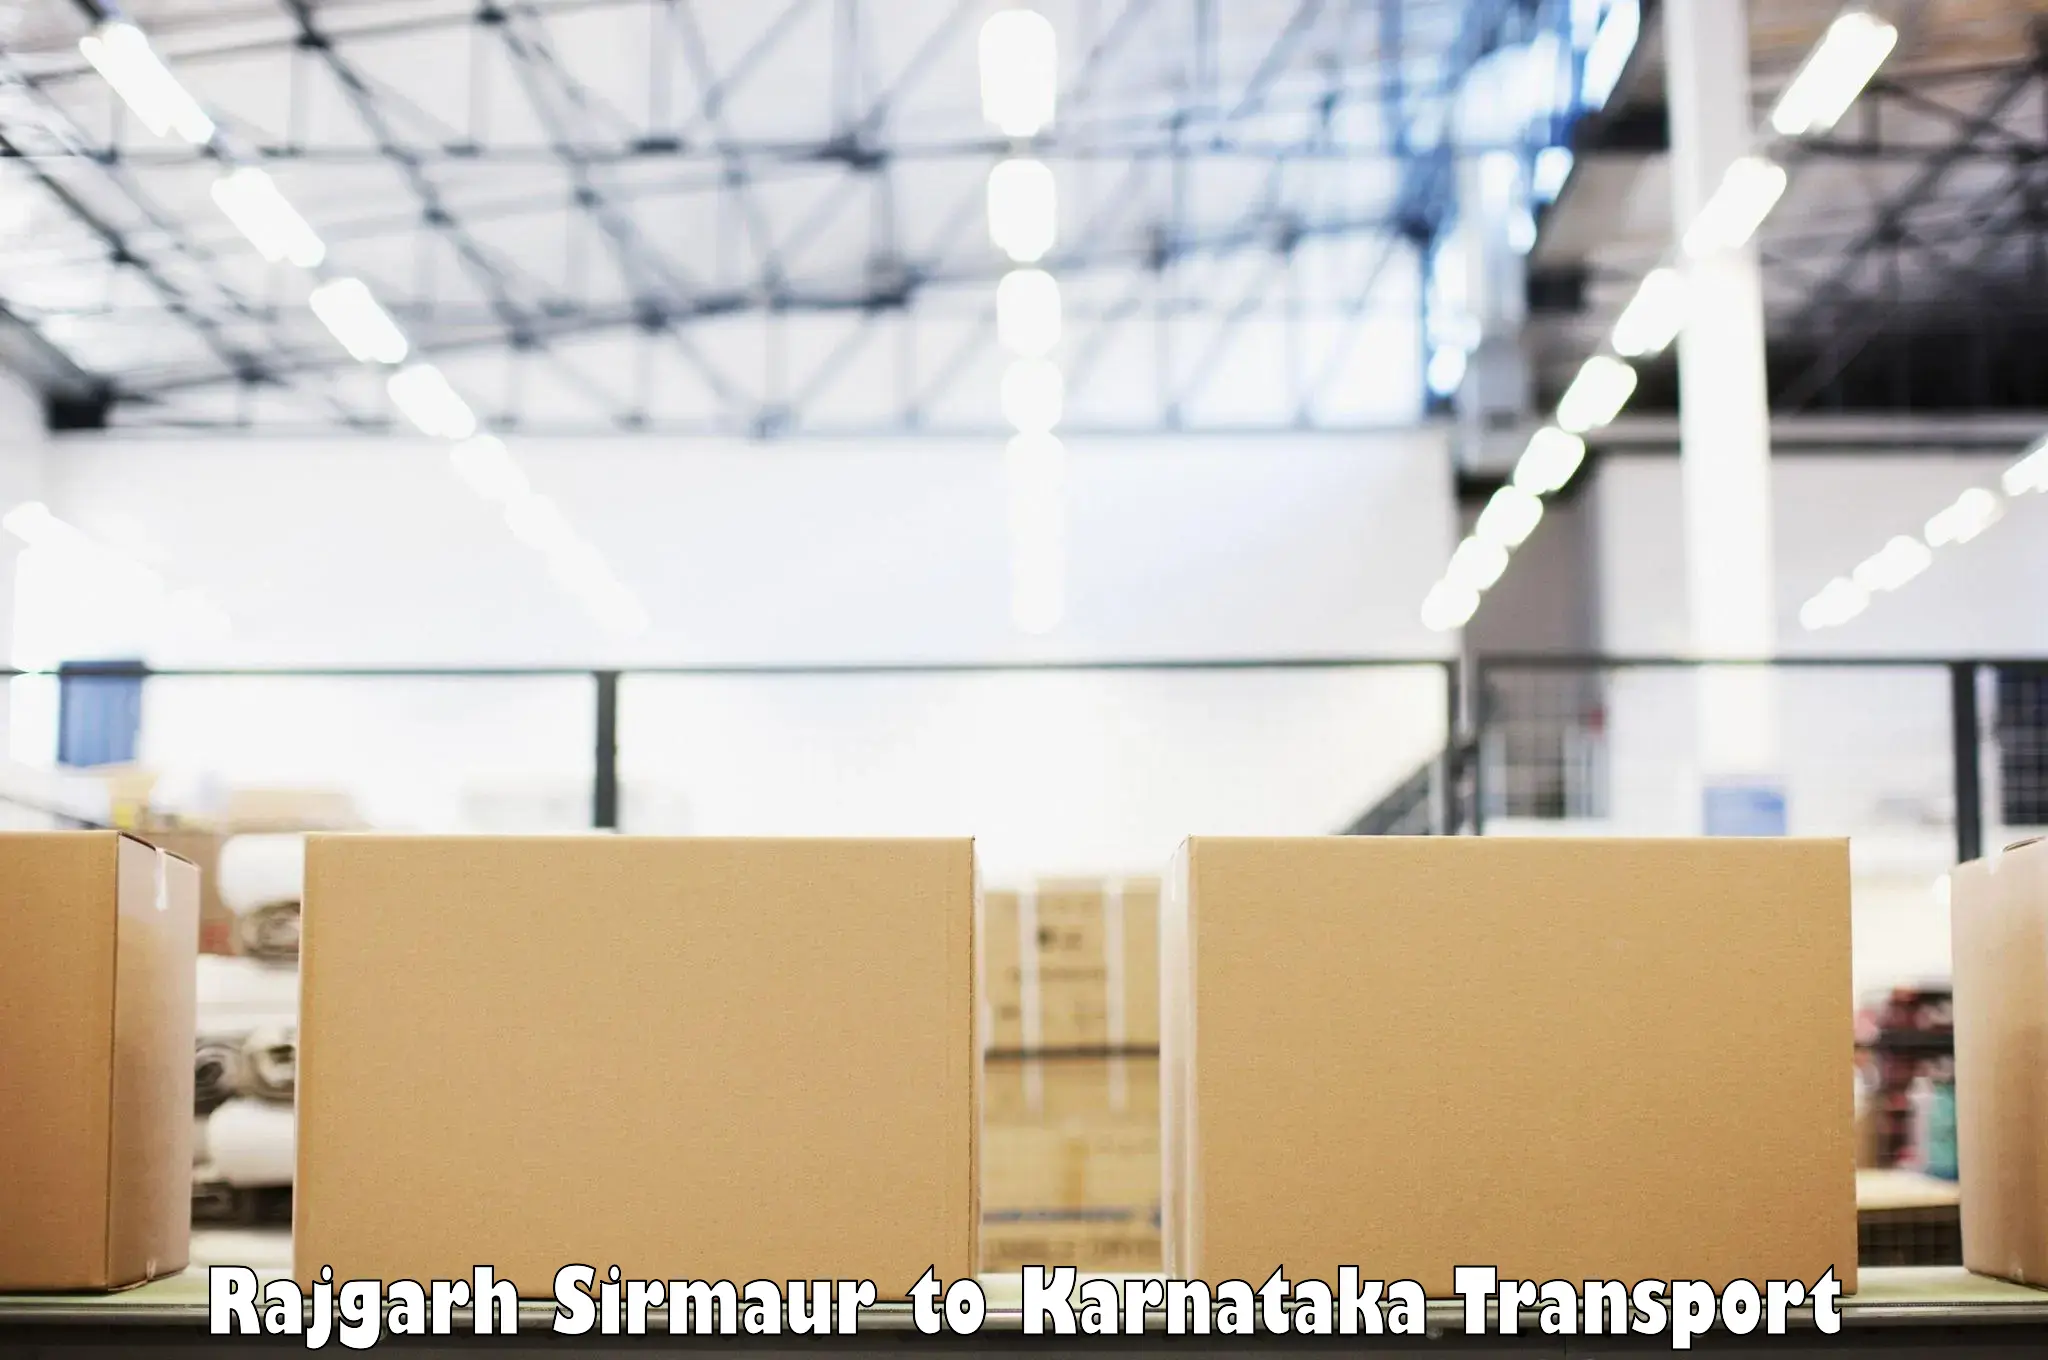 Nearby transport service Rajgarh Sirmaur to Karnataka